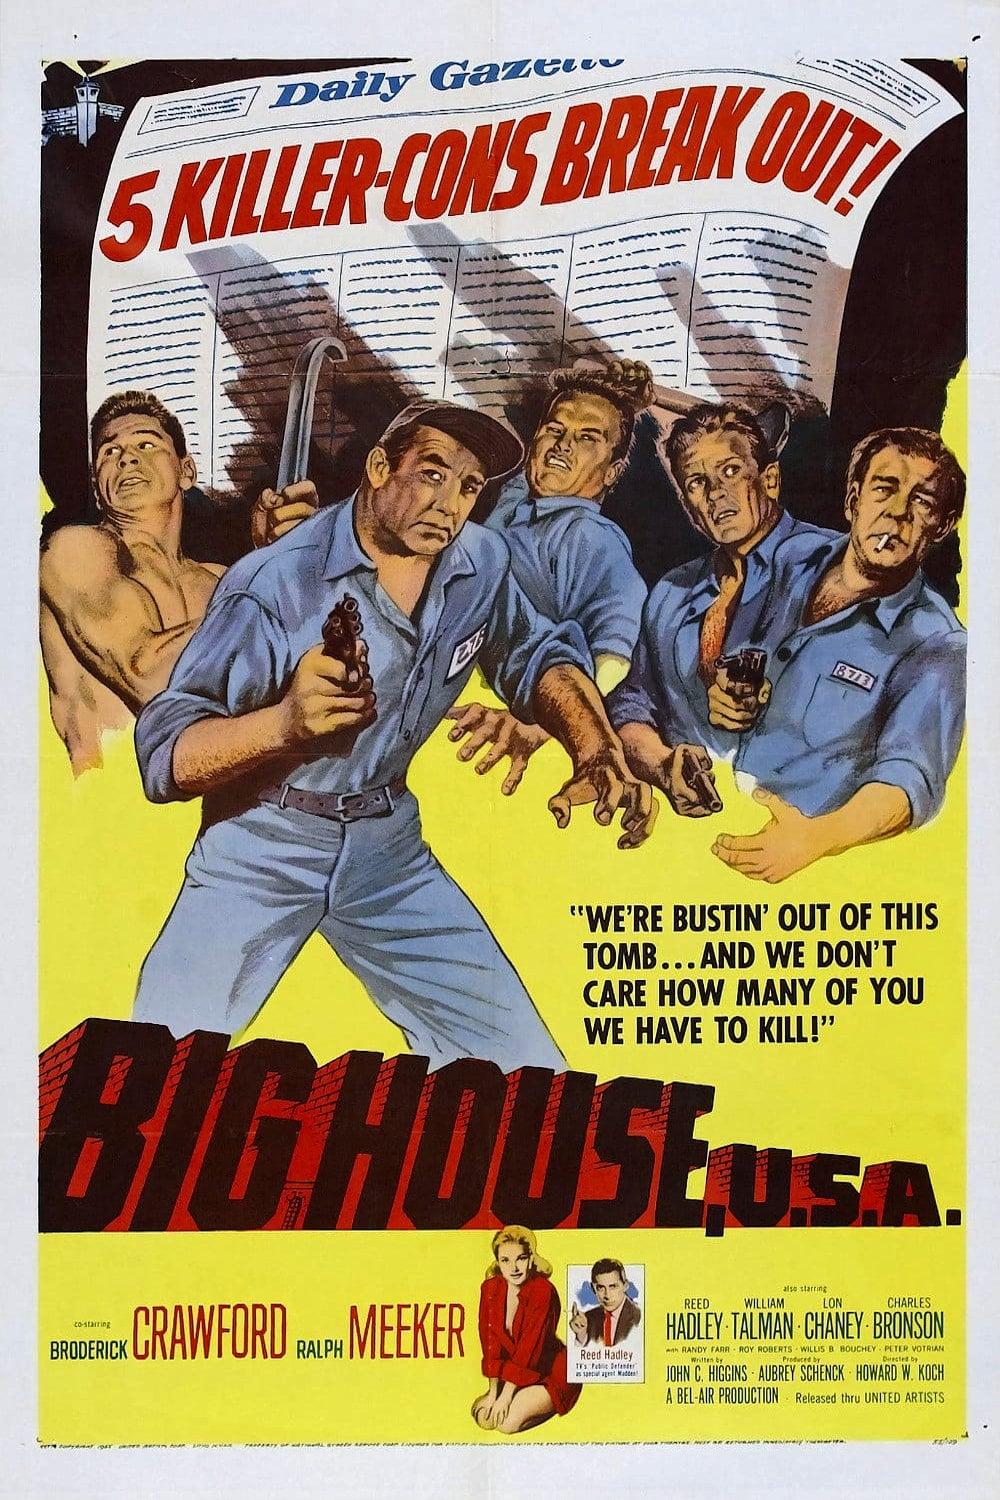 Big House, U.S.A poster